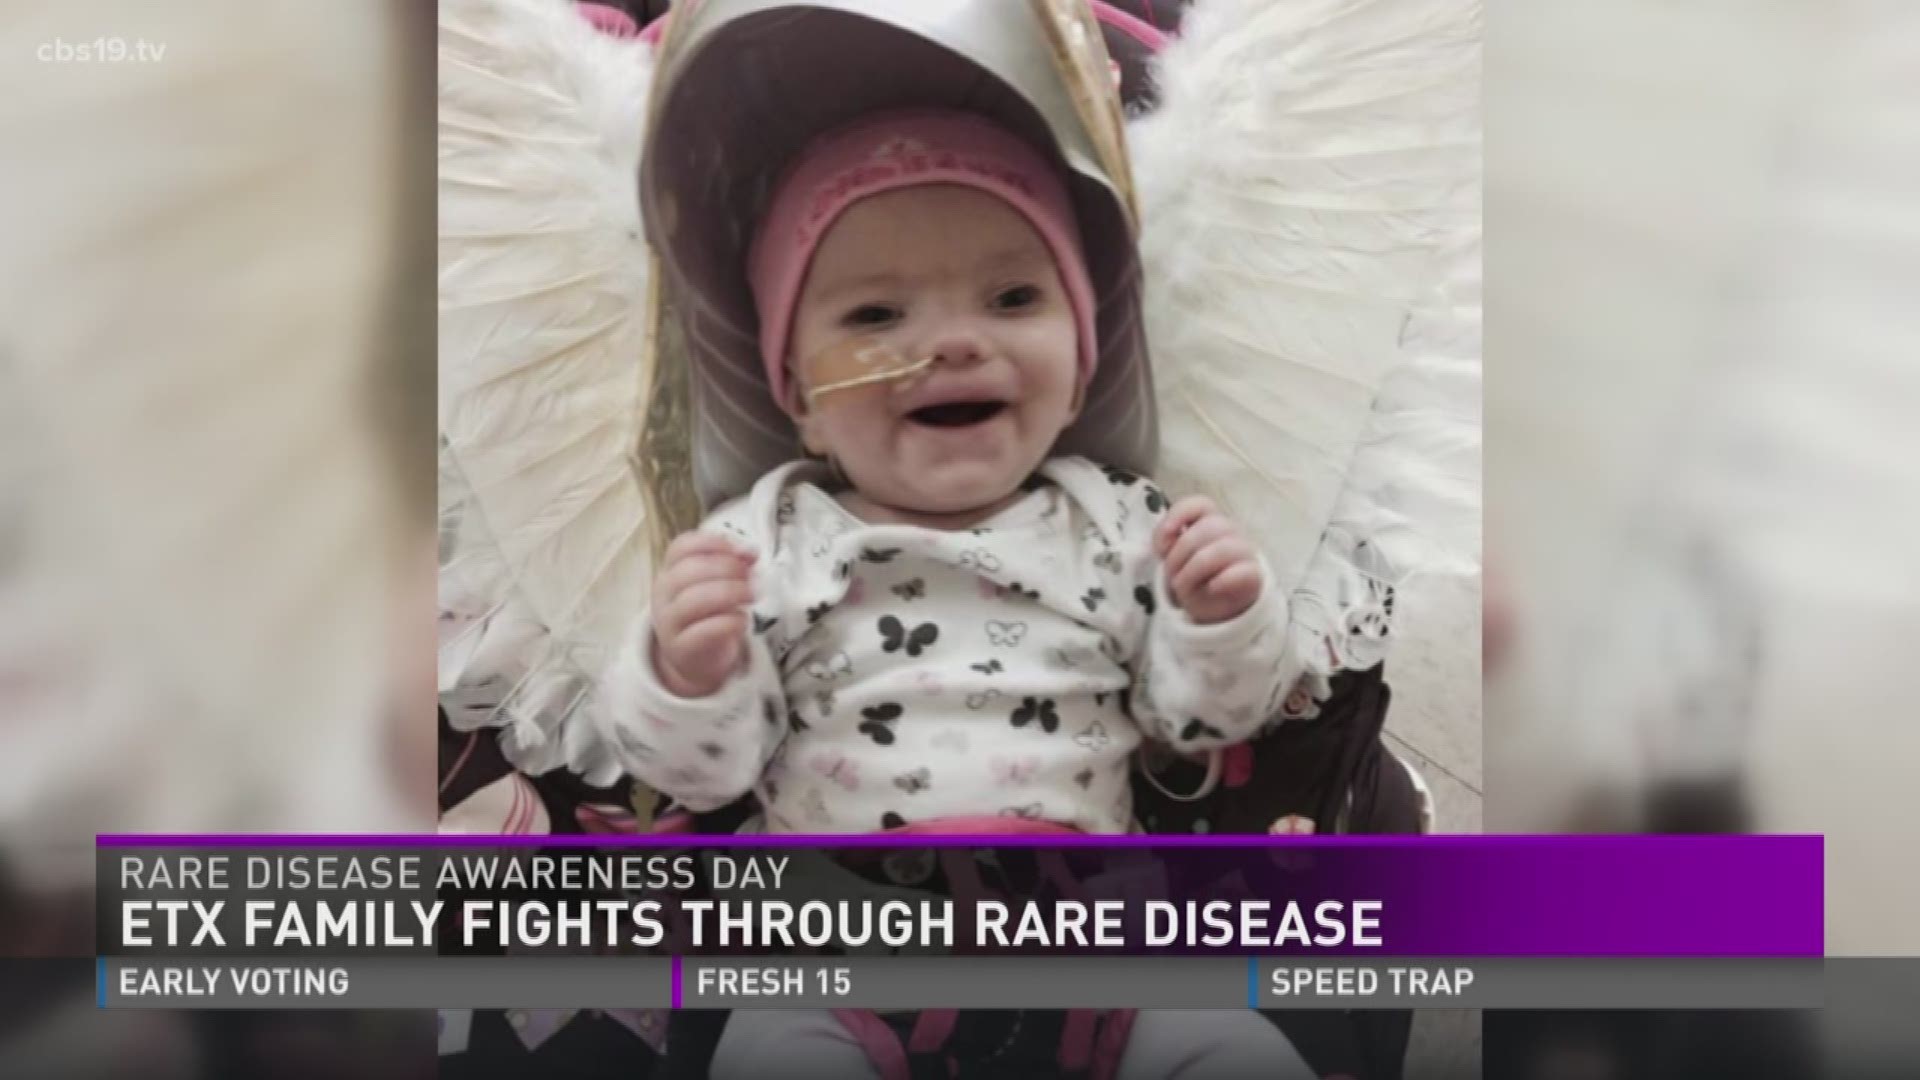 ETX family combats rare disease